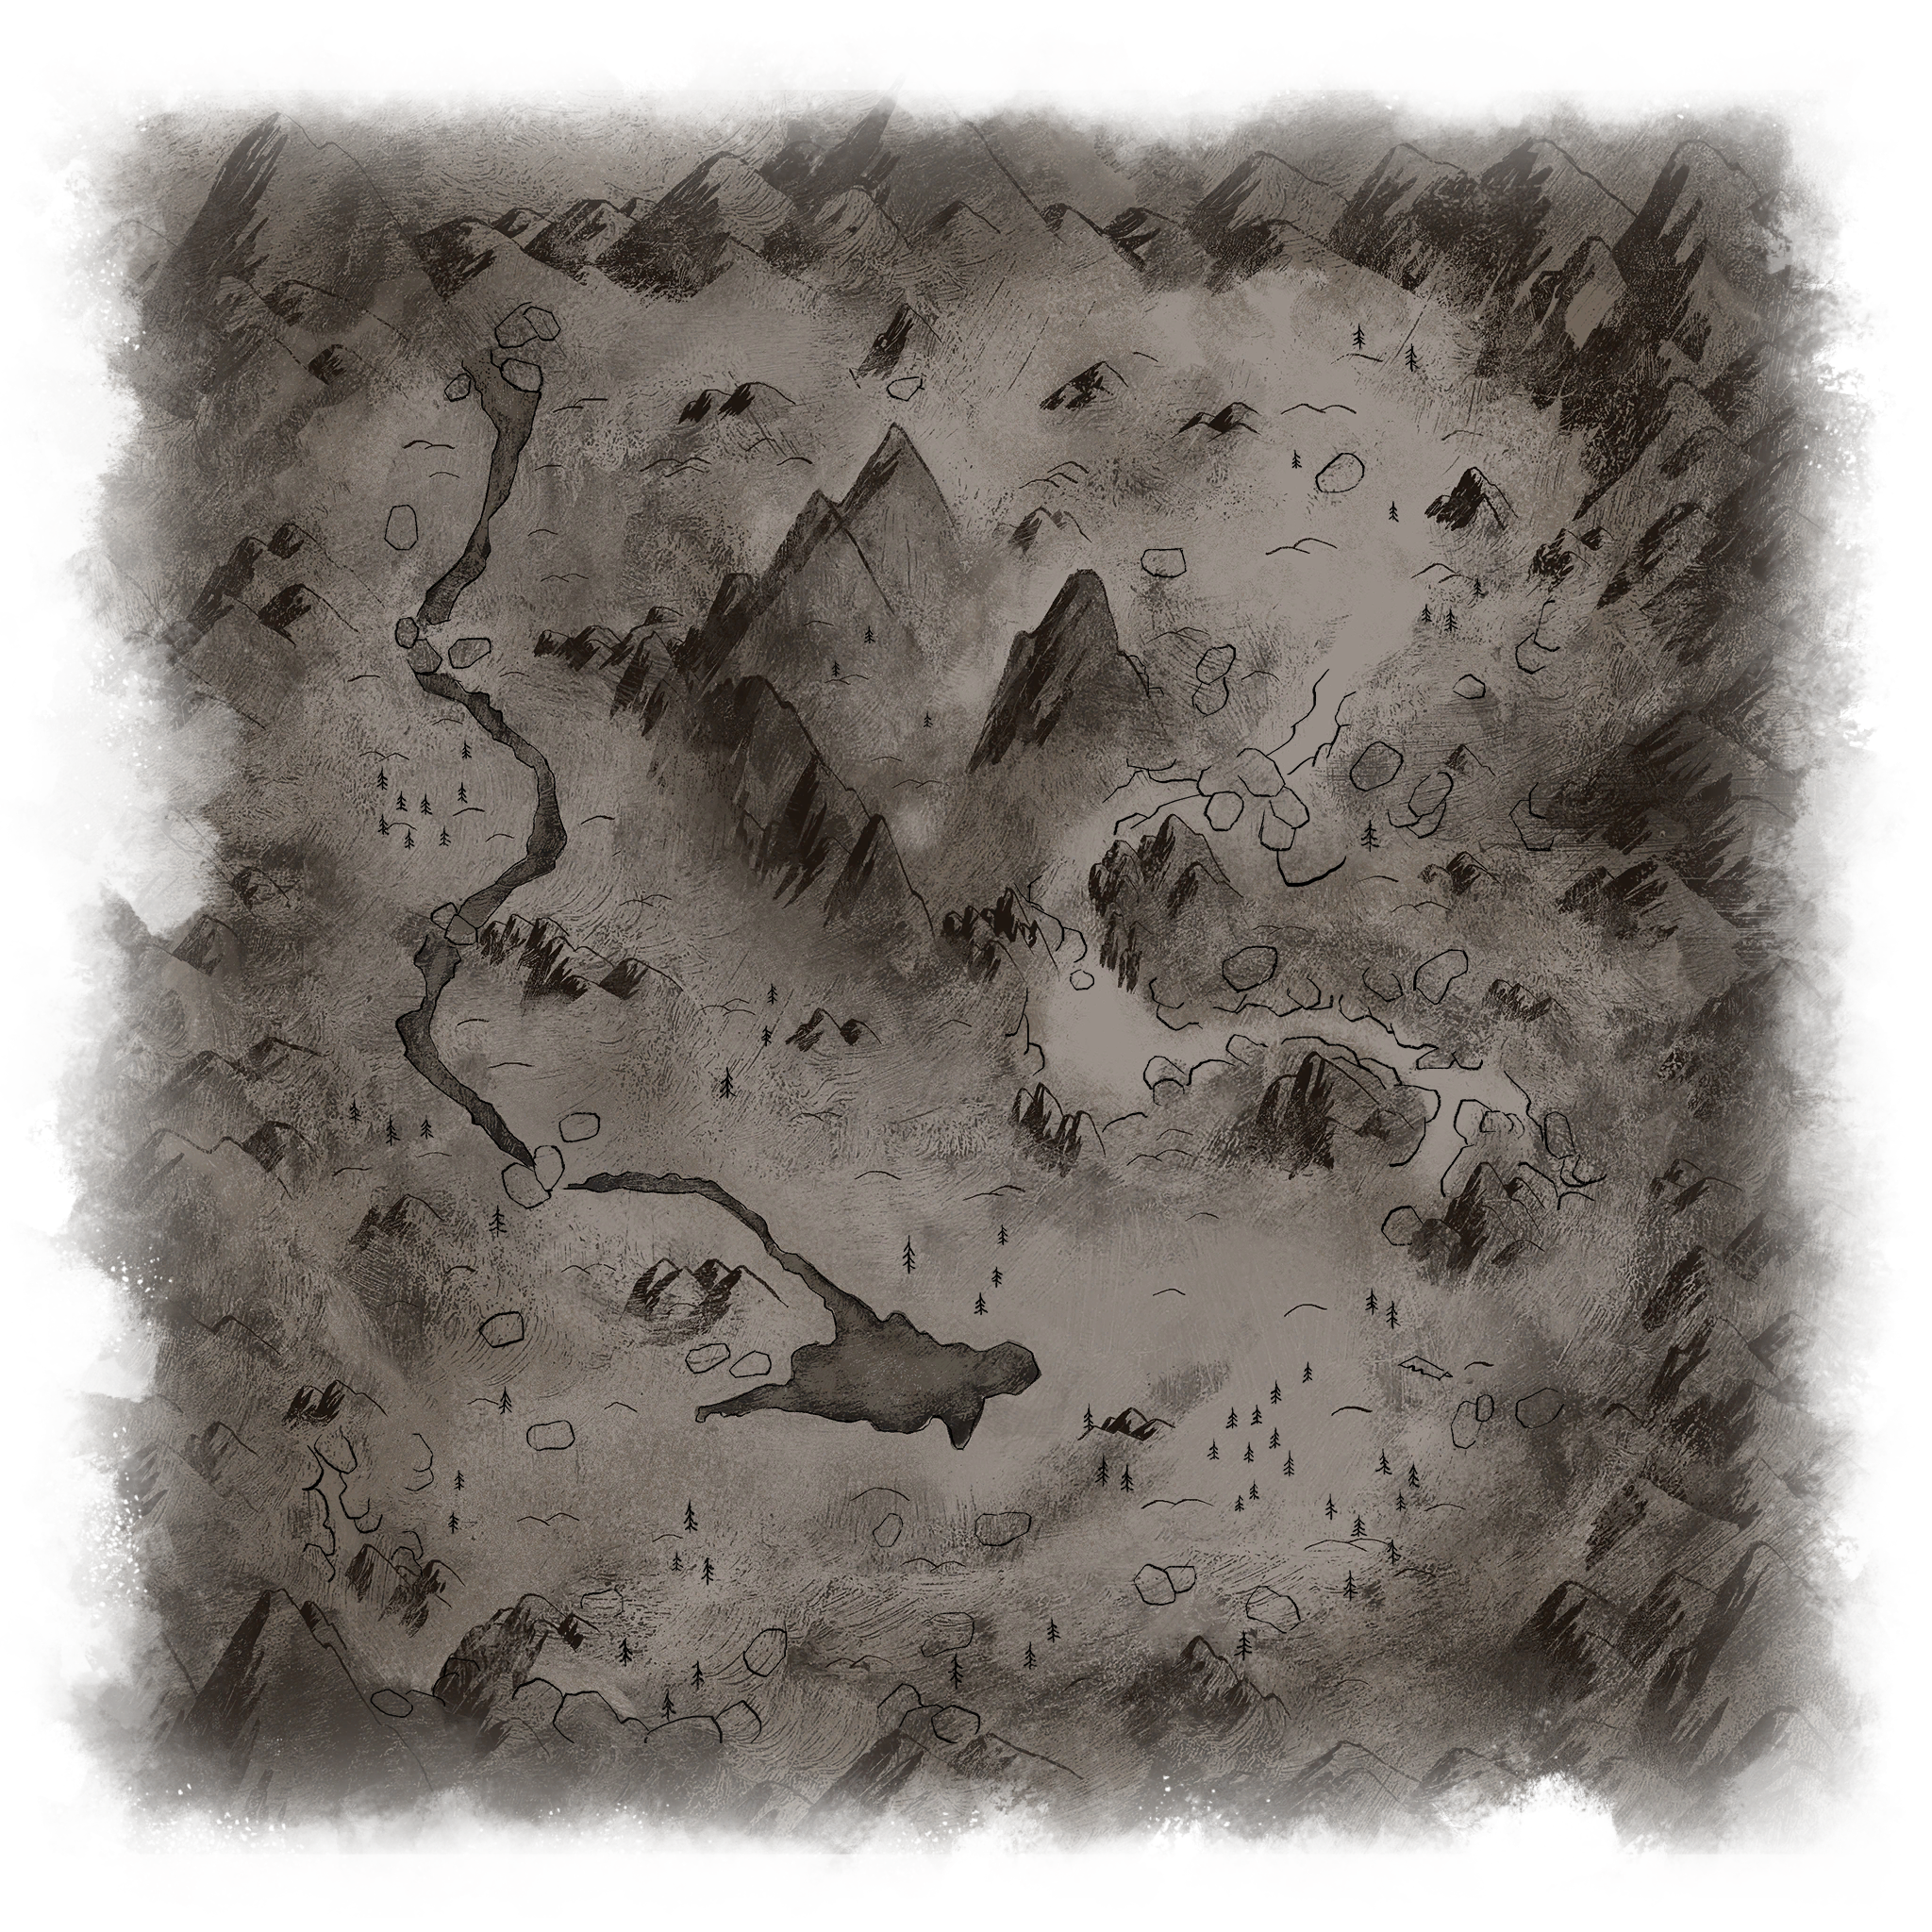 timberwolf mountain map the long dark